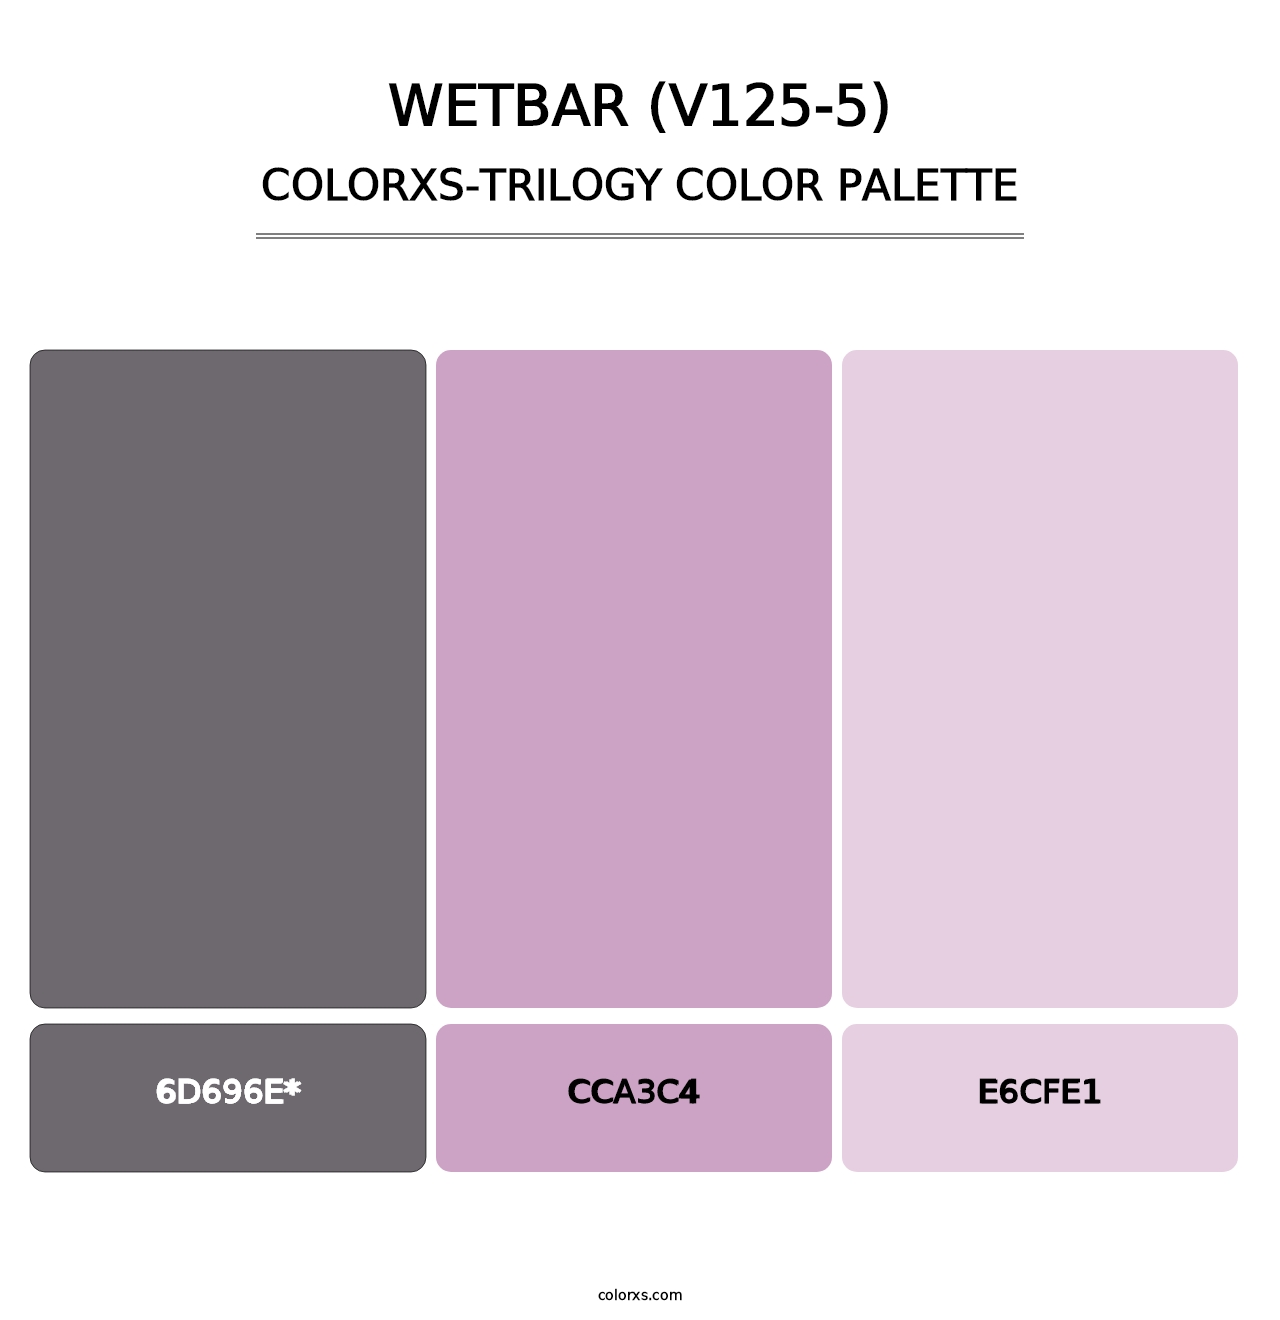 Wetbar (V125-5) - Colorxs Trilogy Palette